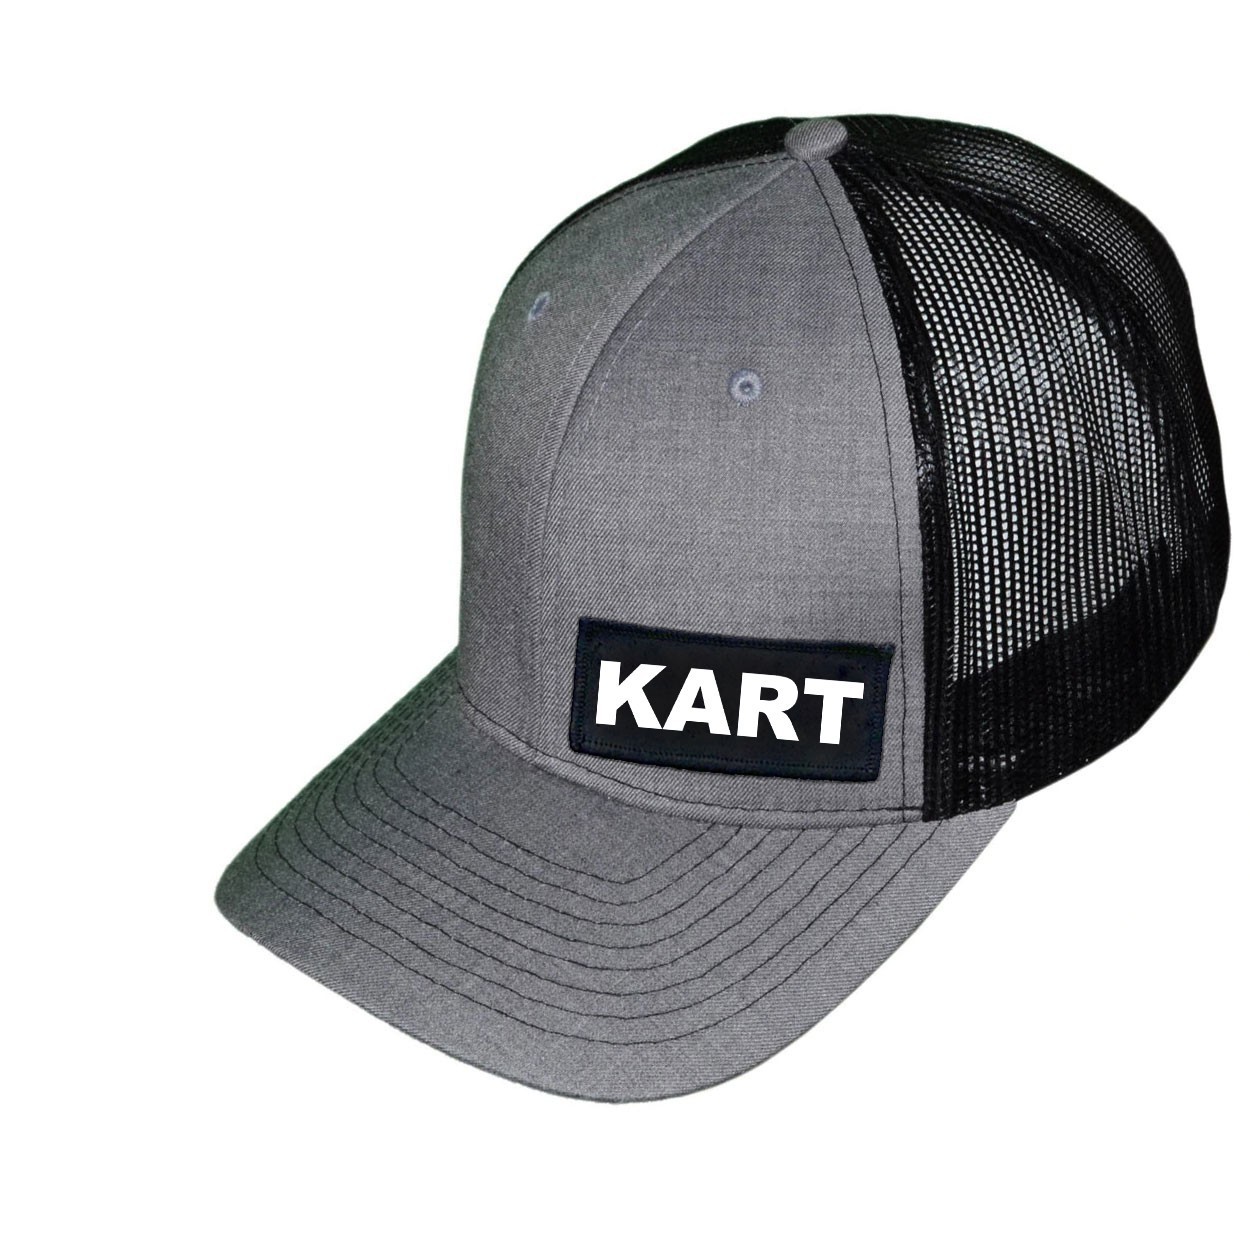 Kart Brand Logo Night Out Woven Patch Snapback Trucker Hat Heather Gray/Black